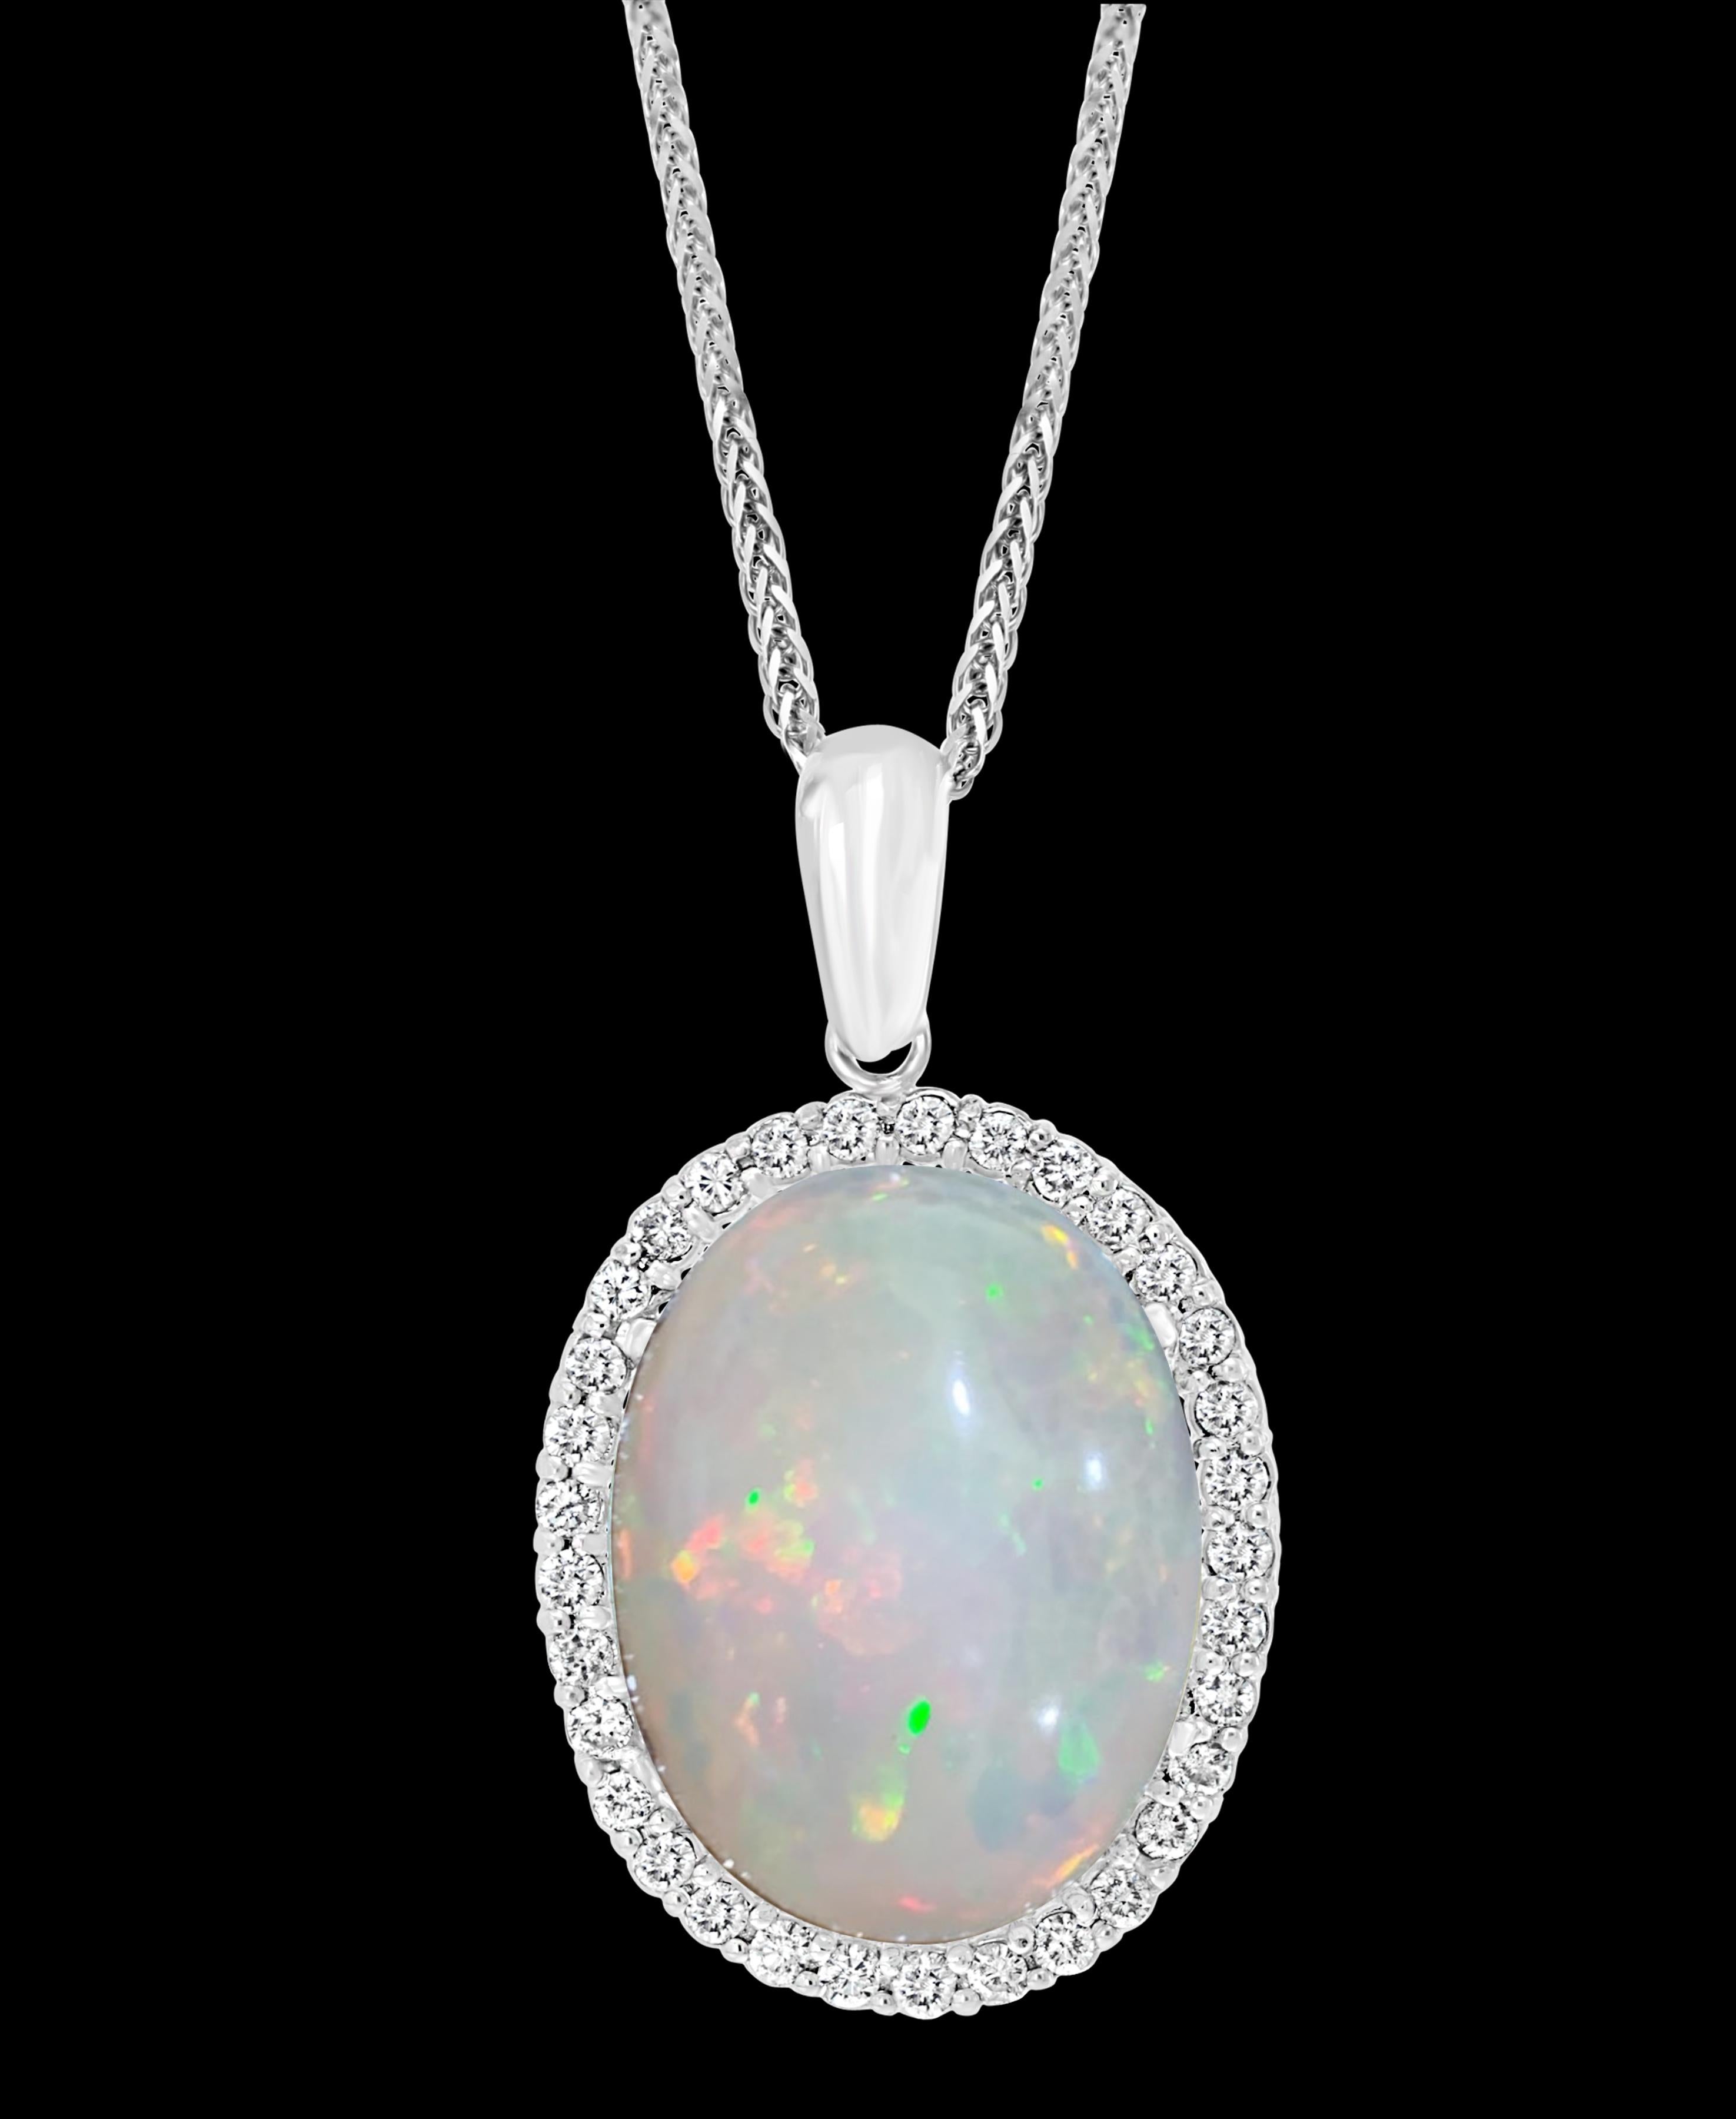 Oval Cut 62 Carat Oval Ethiopian Opal and 3 Carat Diamond Pendant/Necklace 14K White Gold